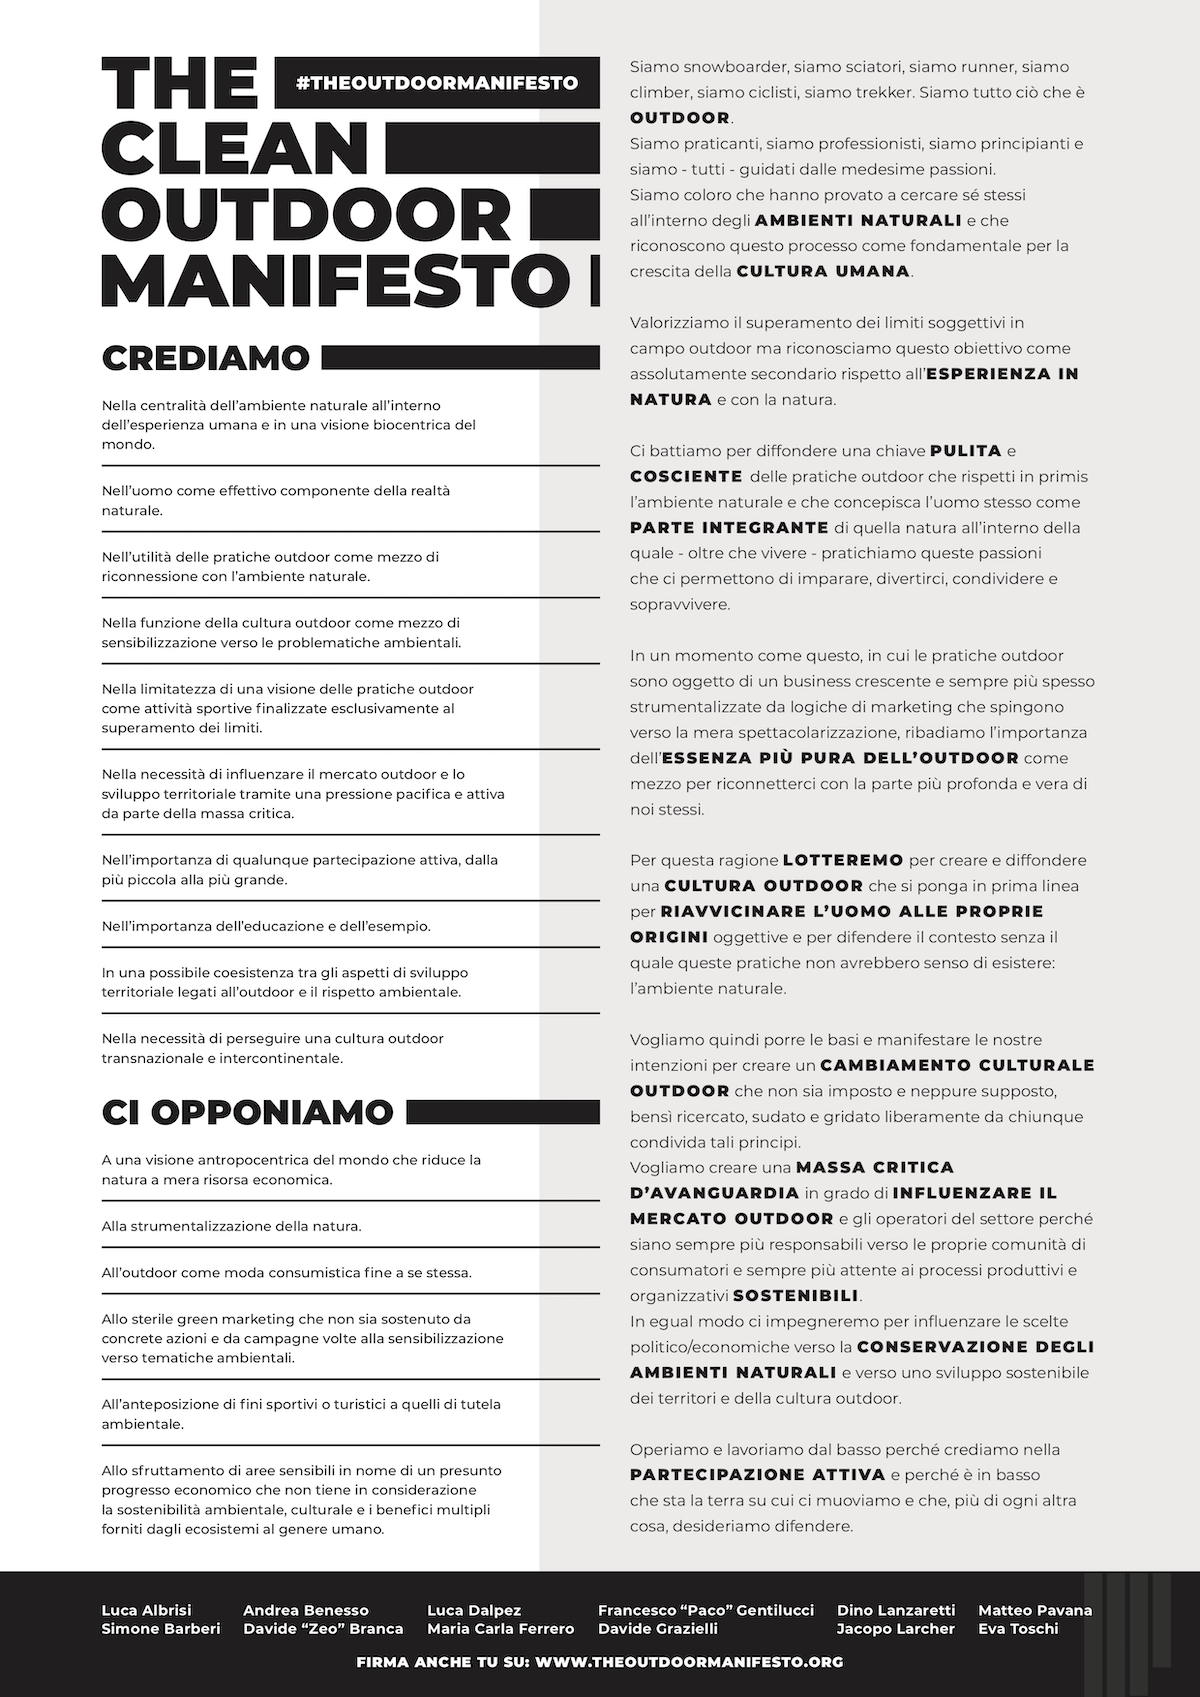 The Outdoor Manifesto